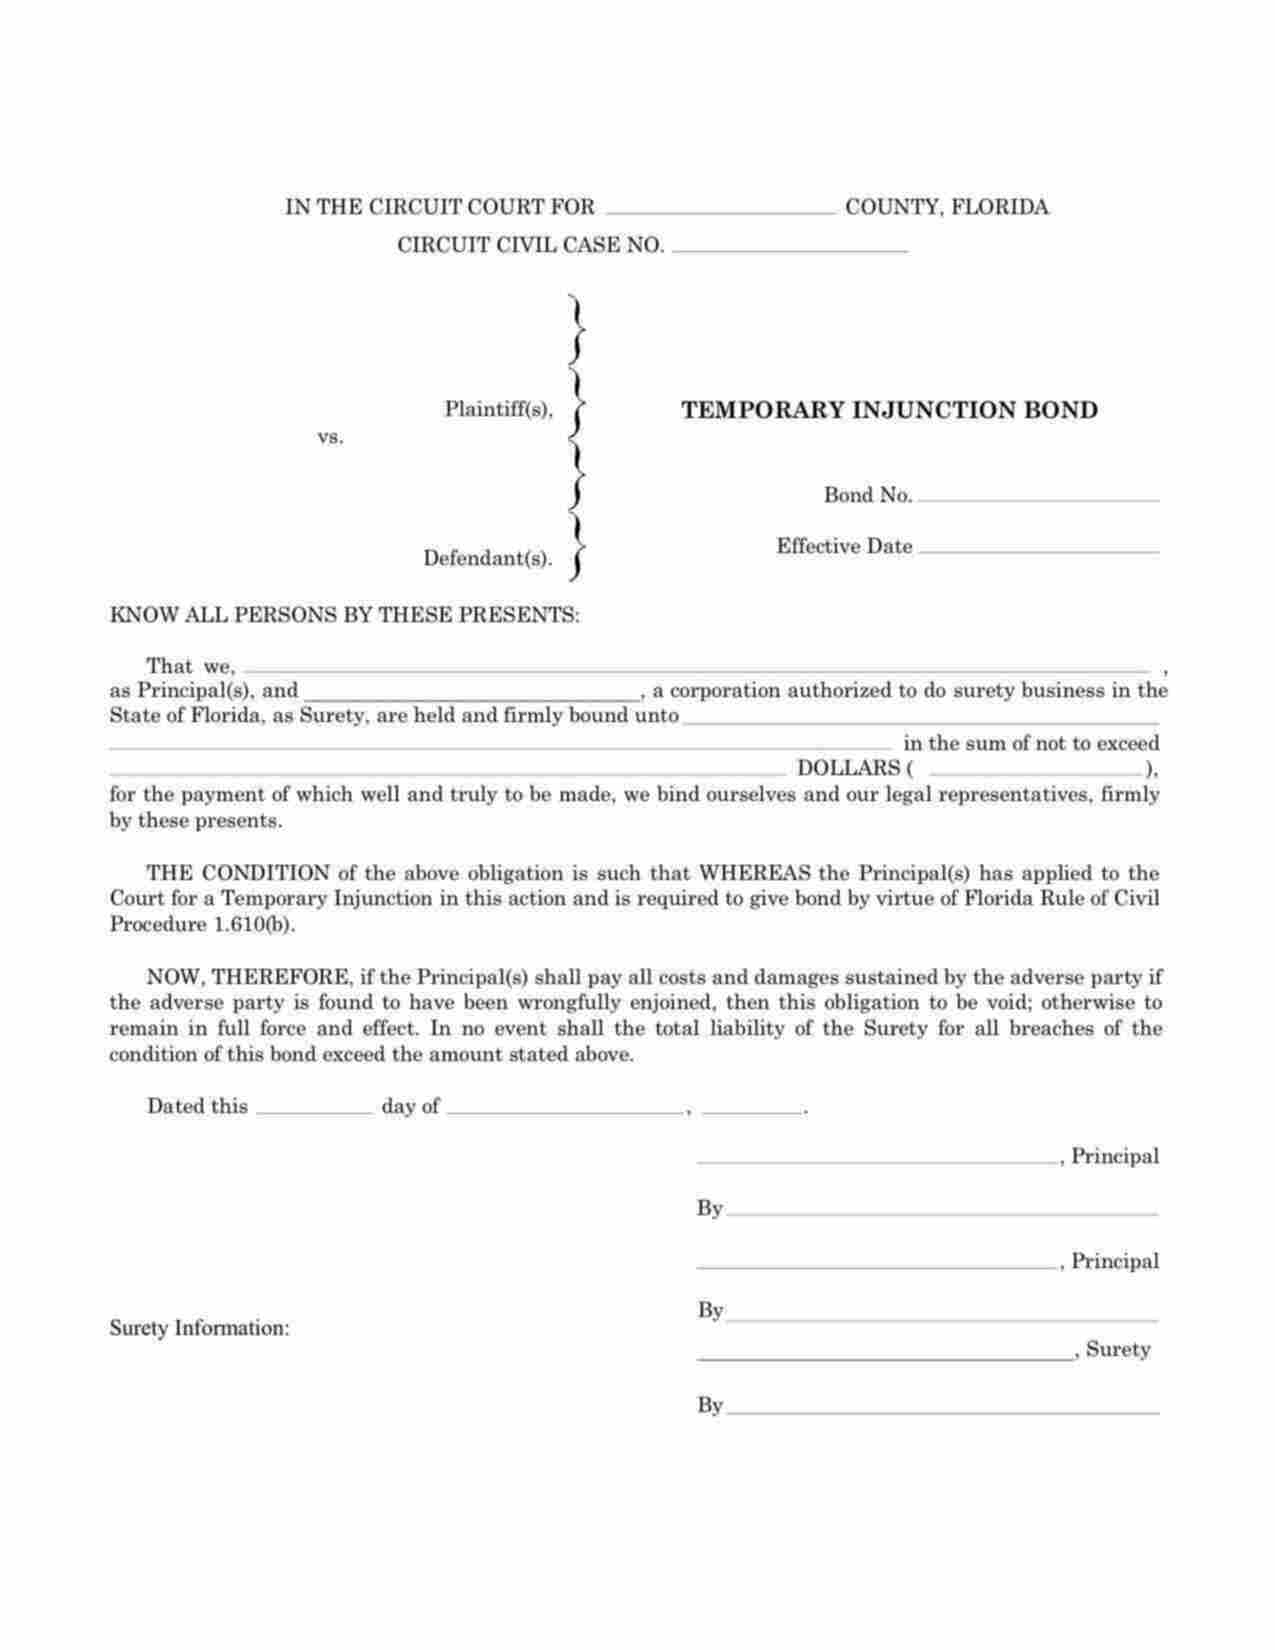 Florida Temporary Injunction Bond Form